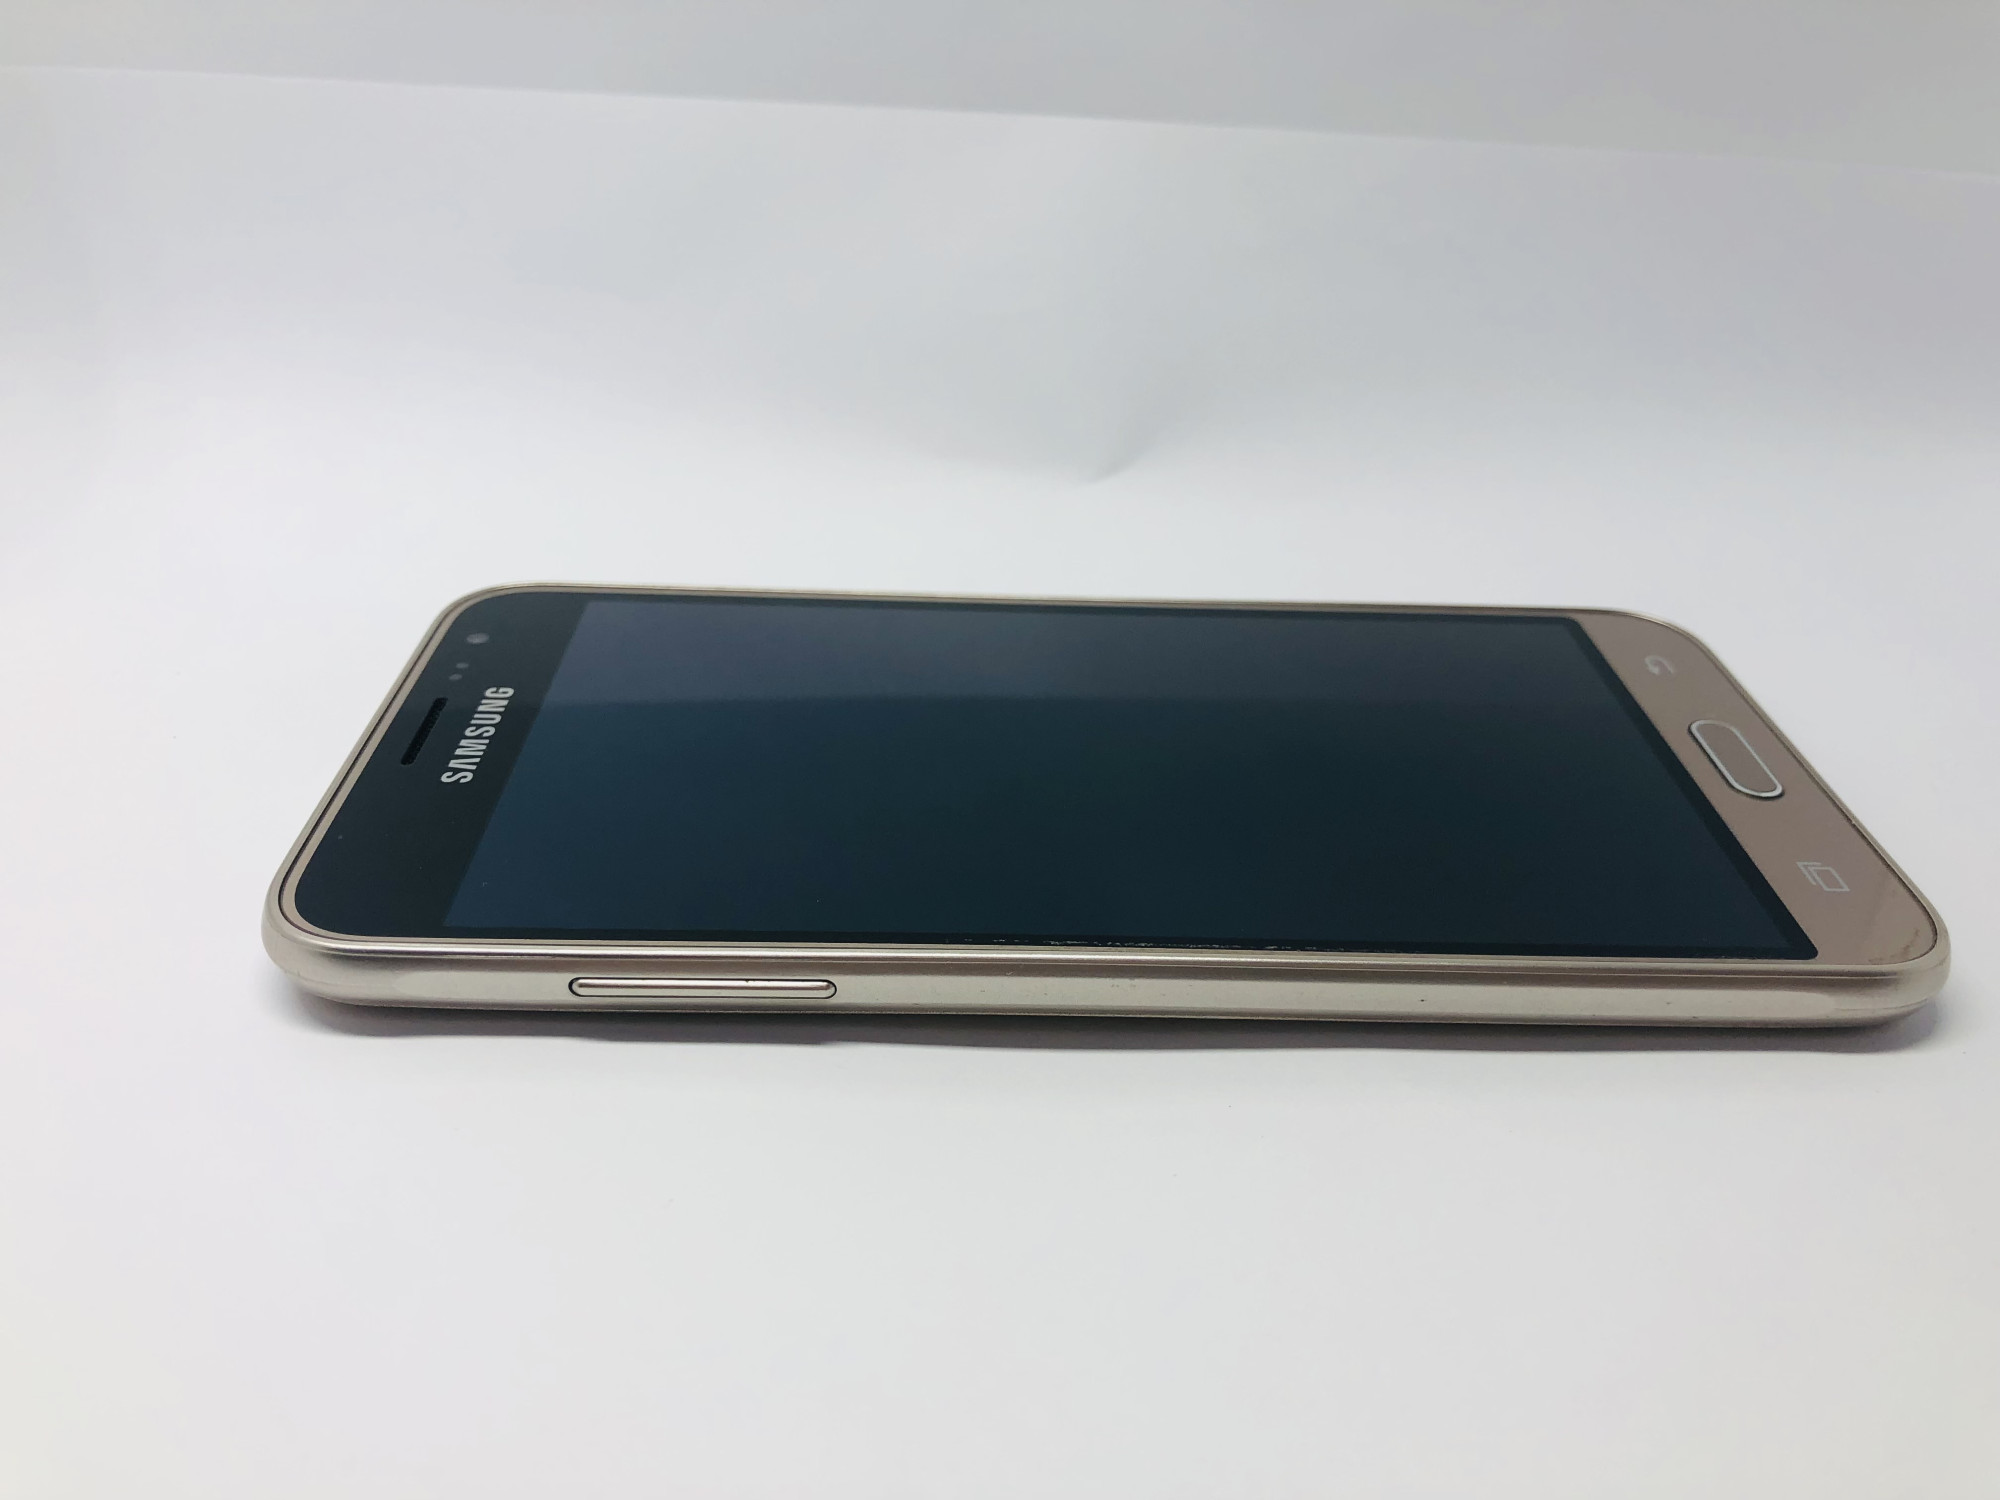 Samsung Galaxy J3 2016 Gold (SM-J320HZDD) 1/8Gb  2